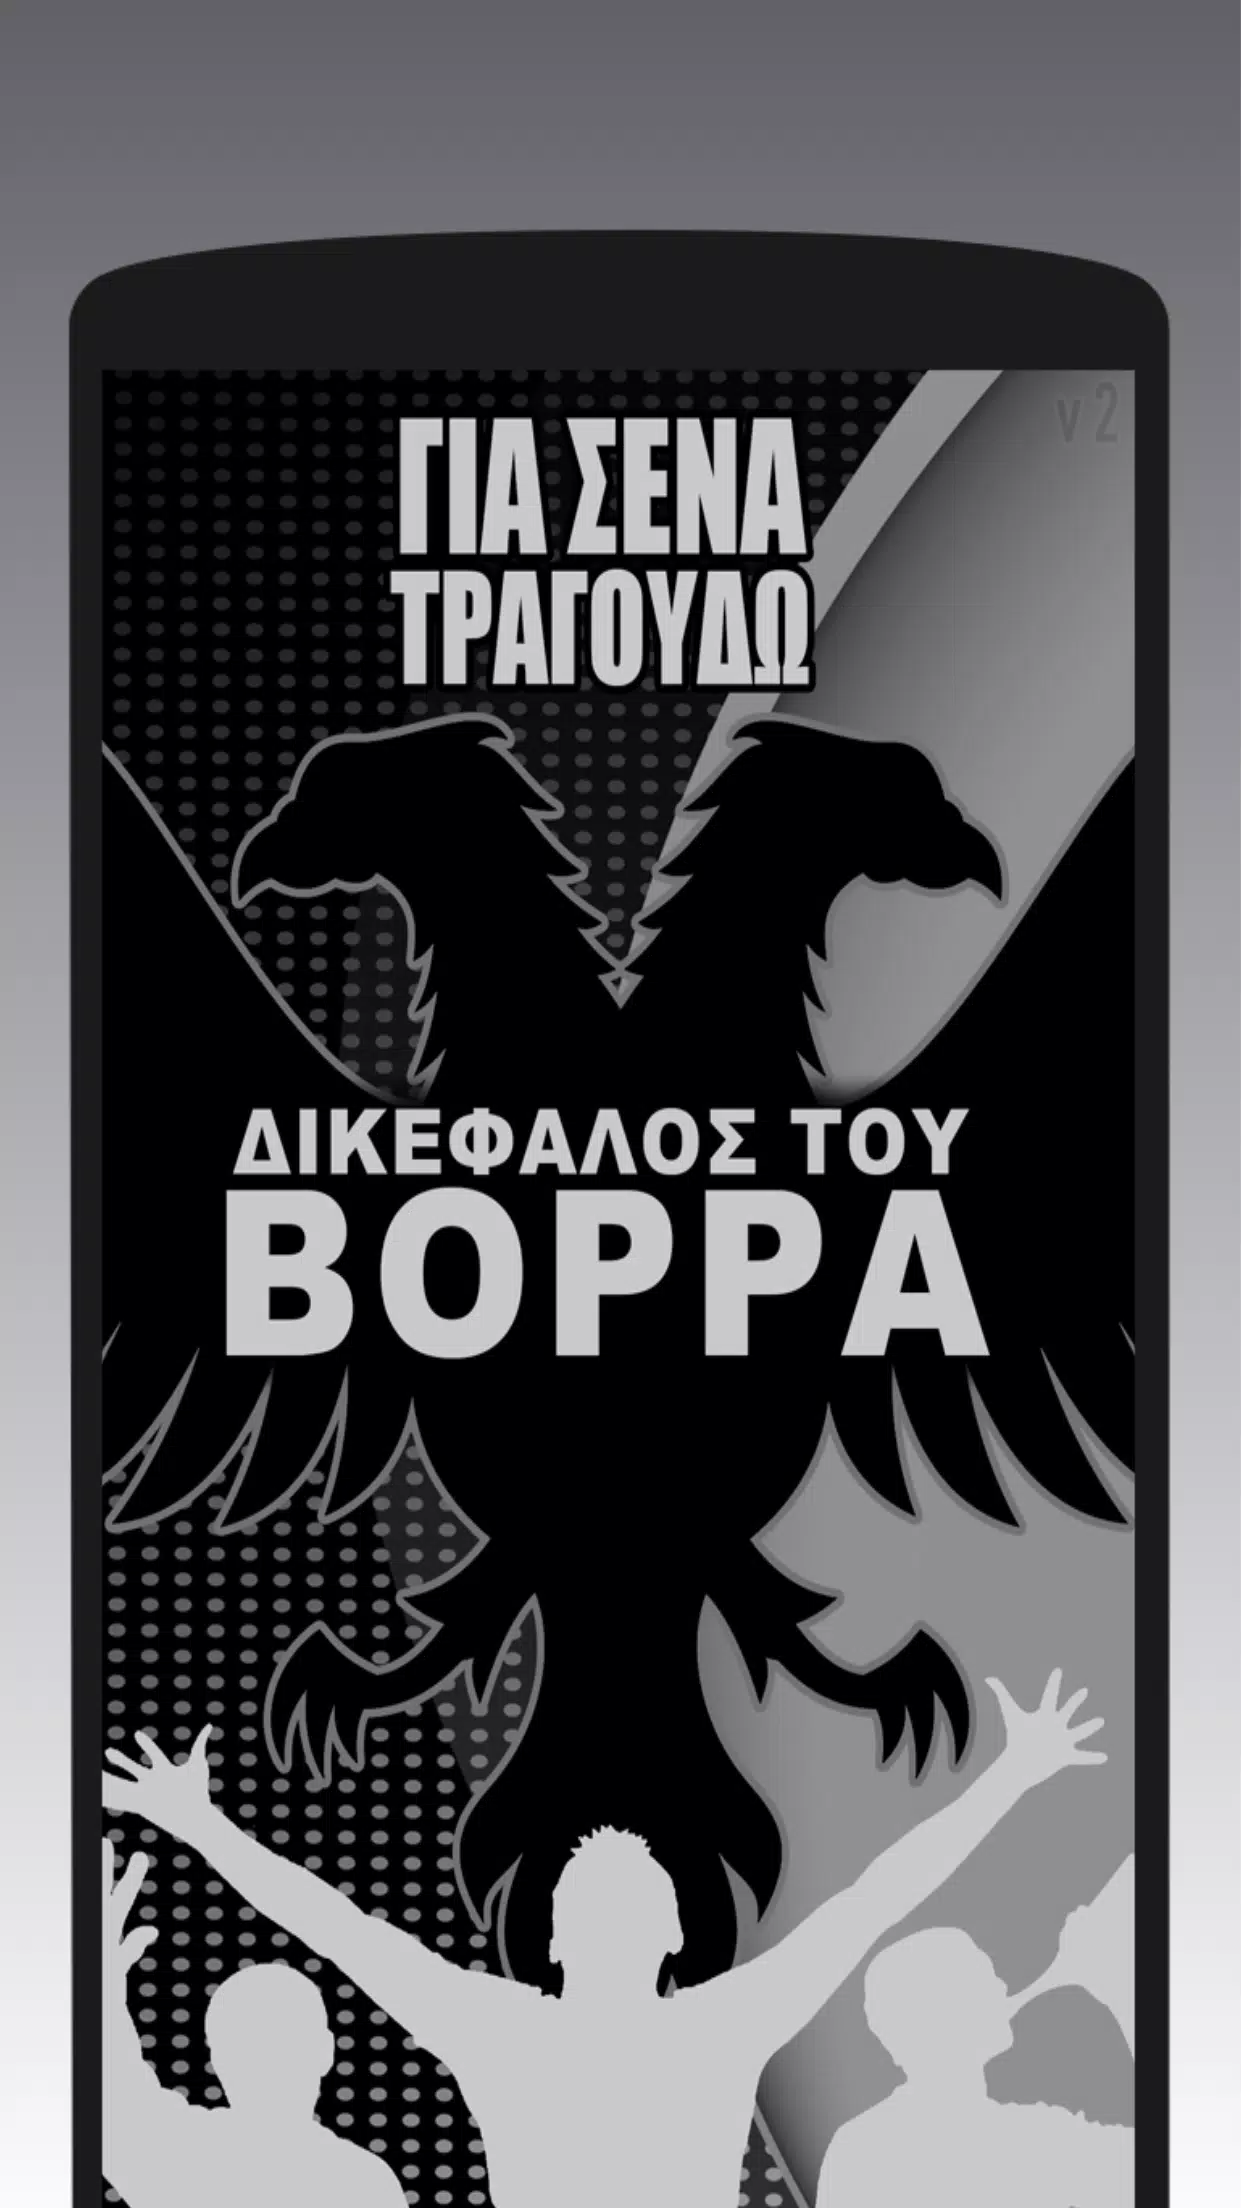 Download do APK de ΠΑΟΚ Συνθήματα Κερκίδας - Για Σένα Τραγουδώ para Android